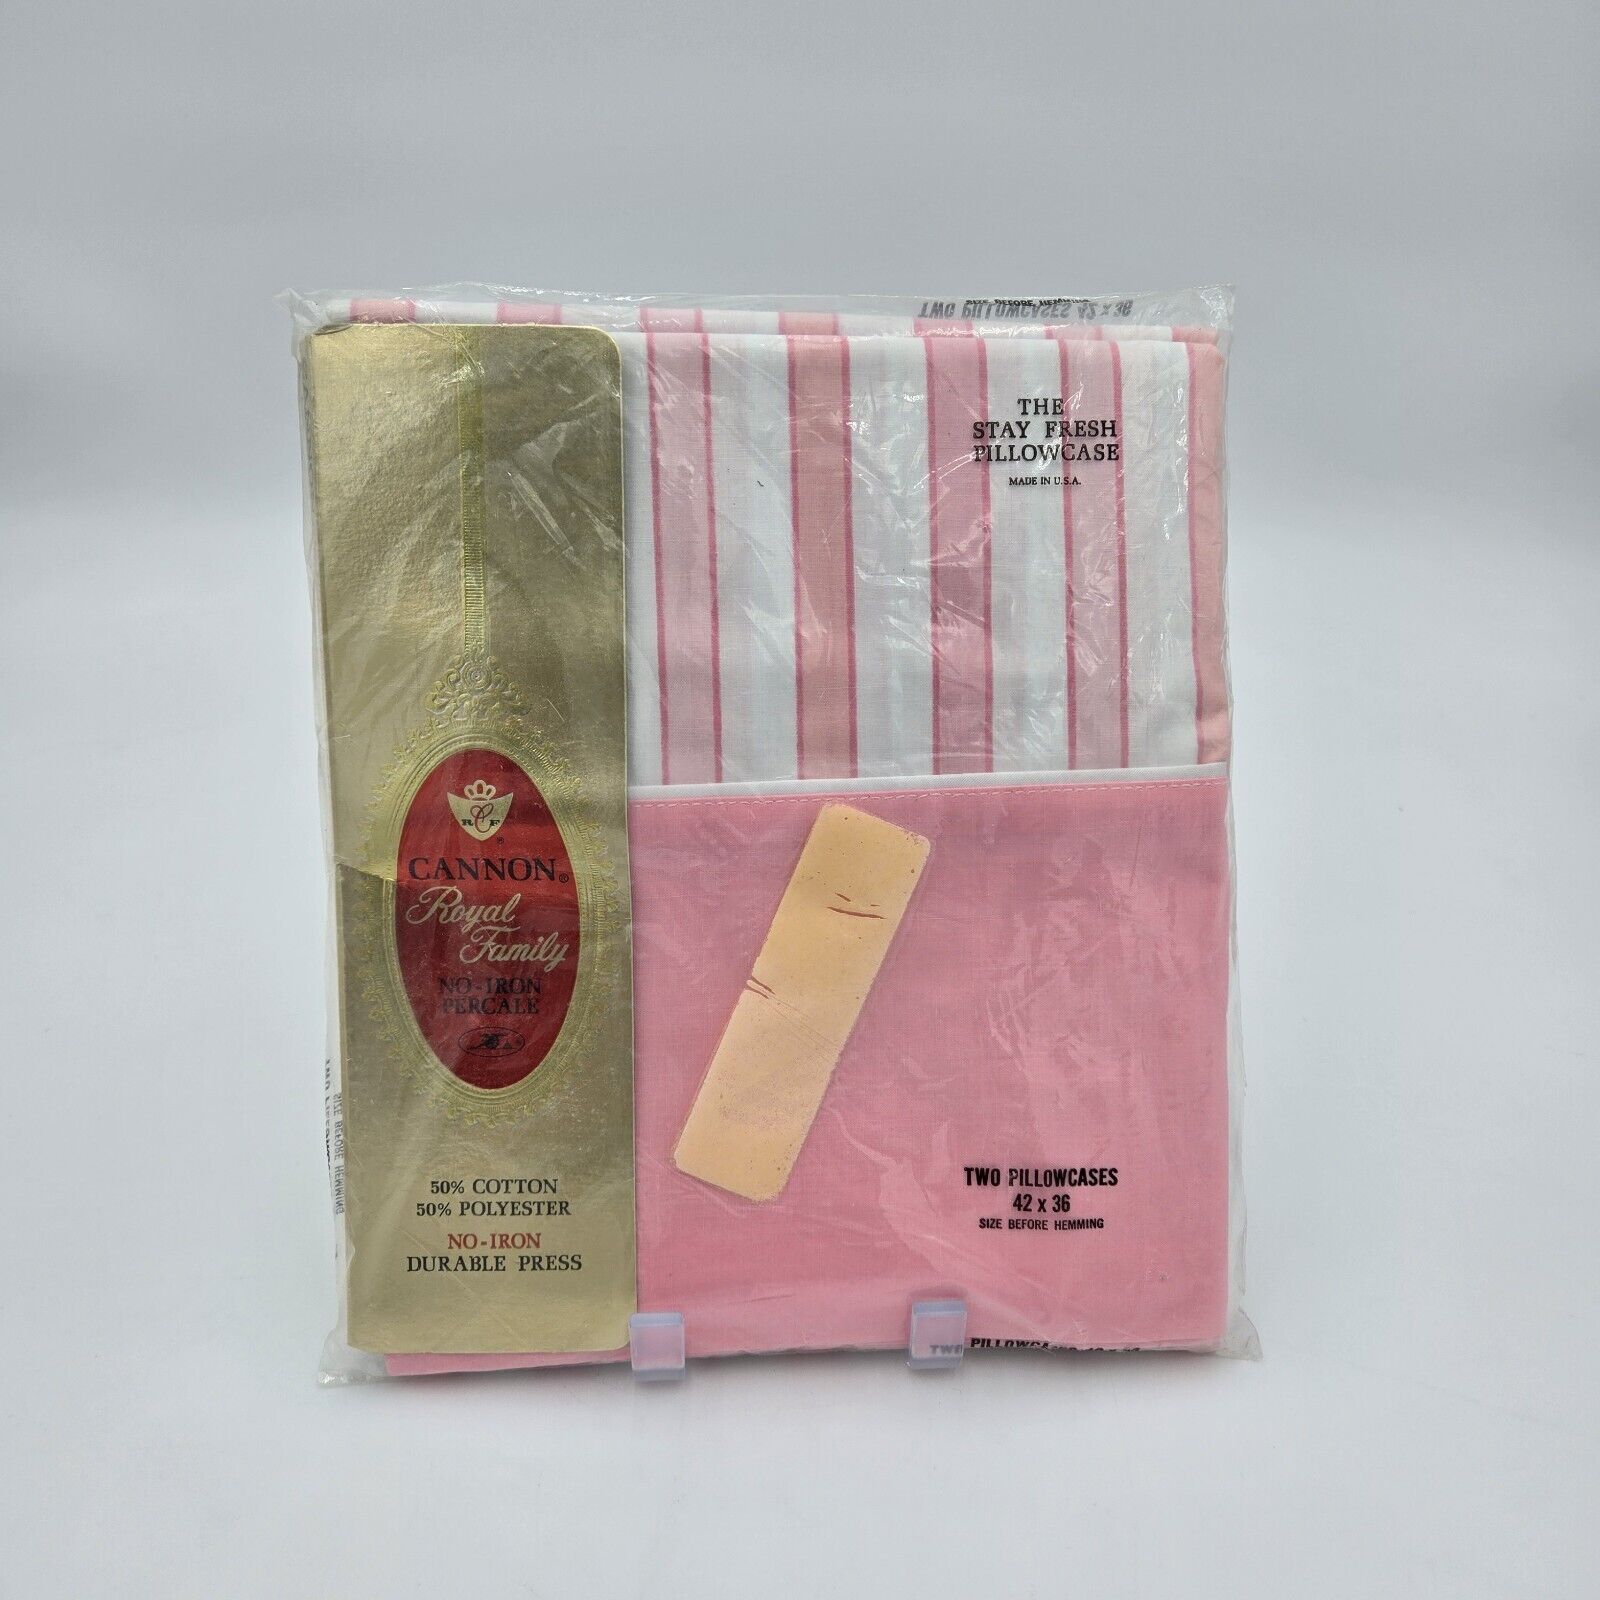 Vintage 2 Pillowcases Royal Family Cannon Tempo Pink Stripe Percale NOS #545